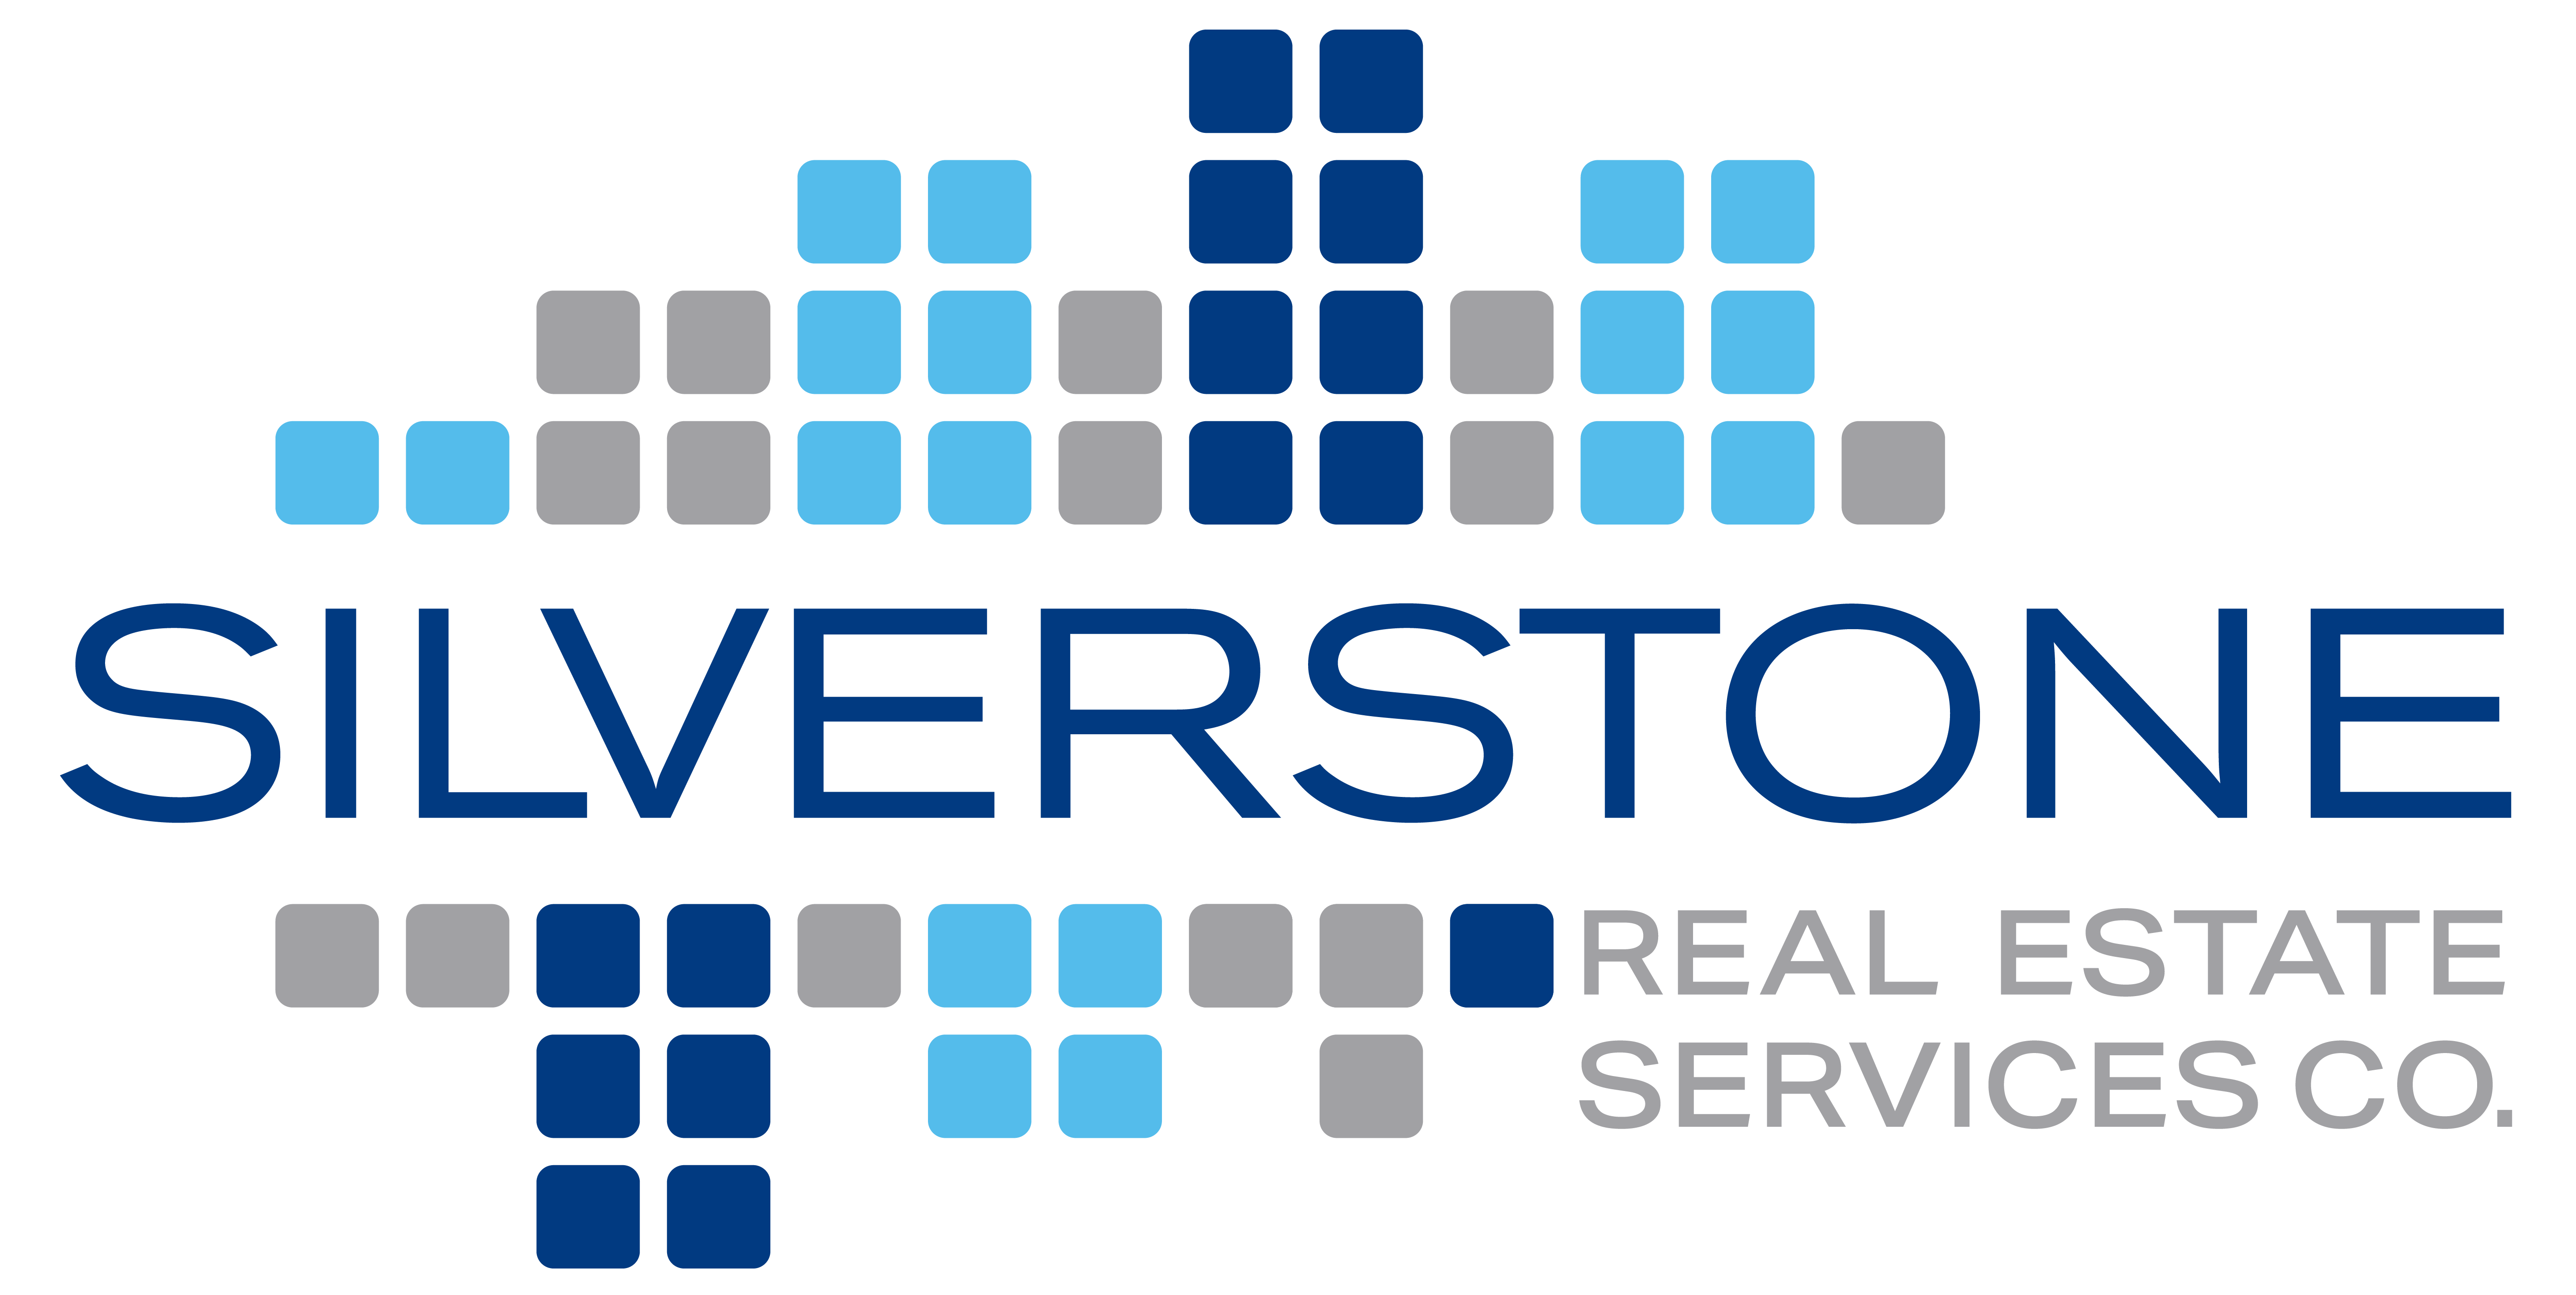 SilverStone Real Estate Services Co.